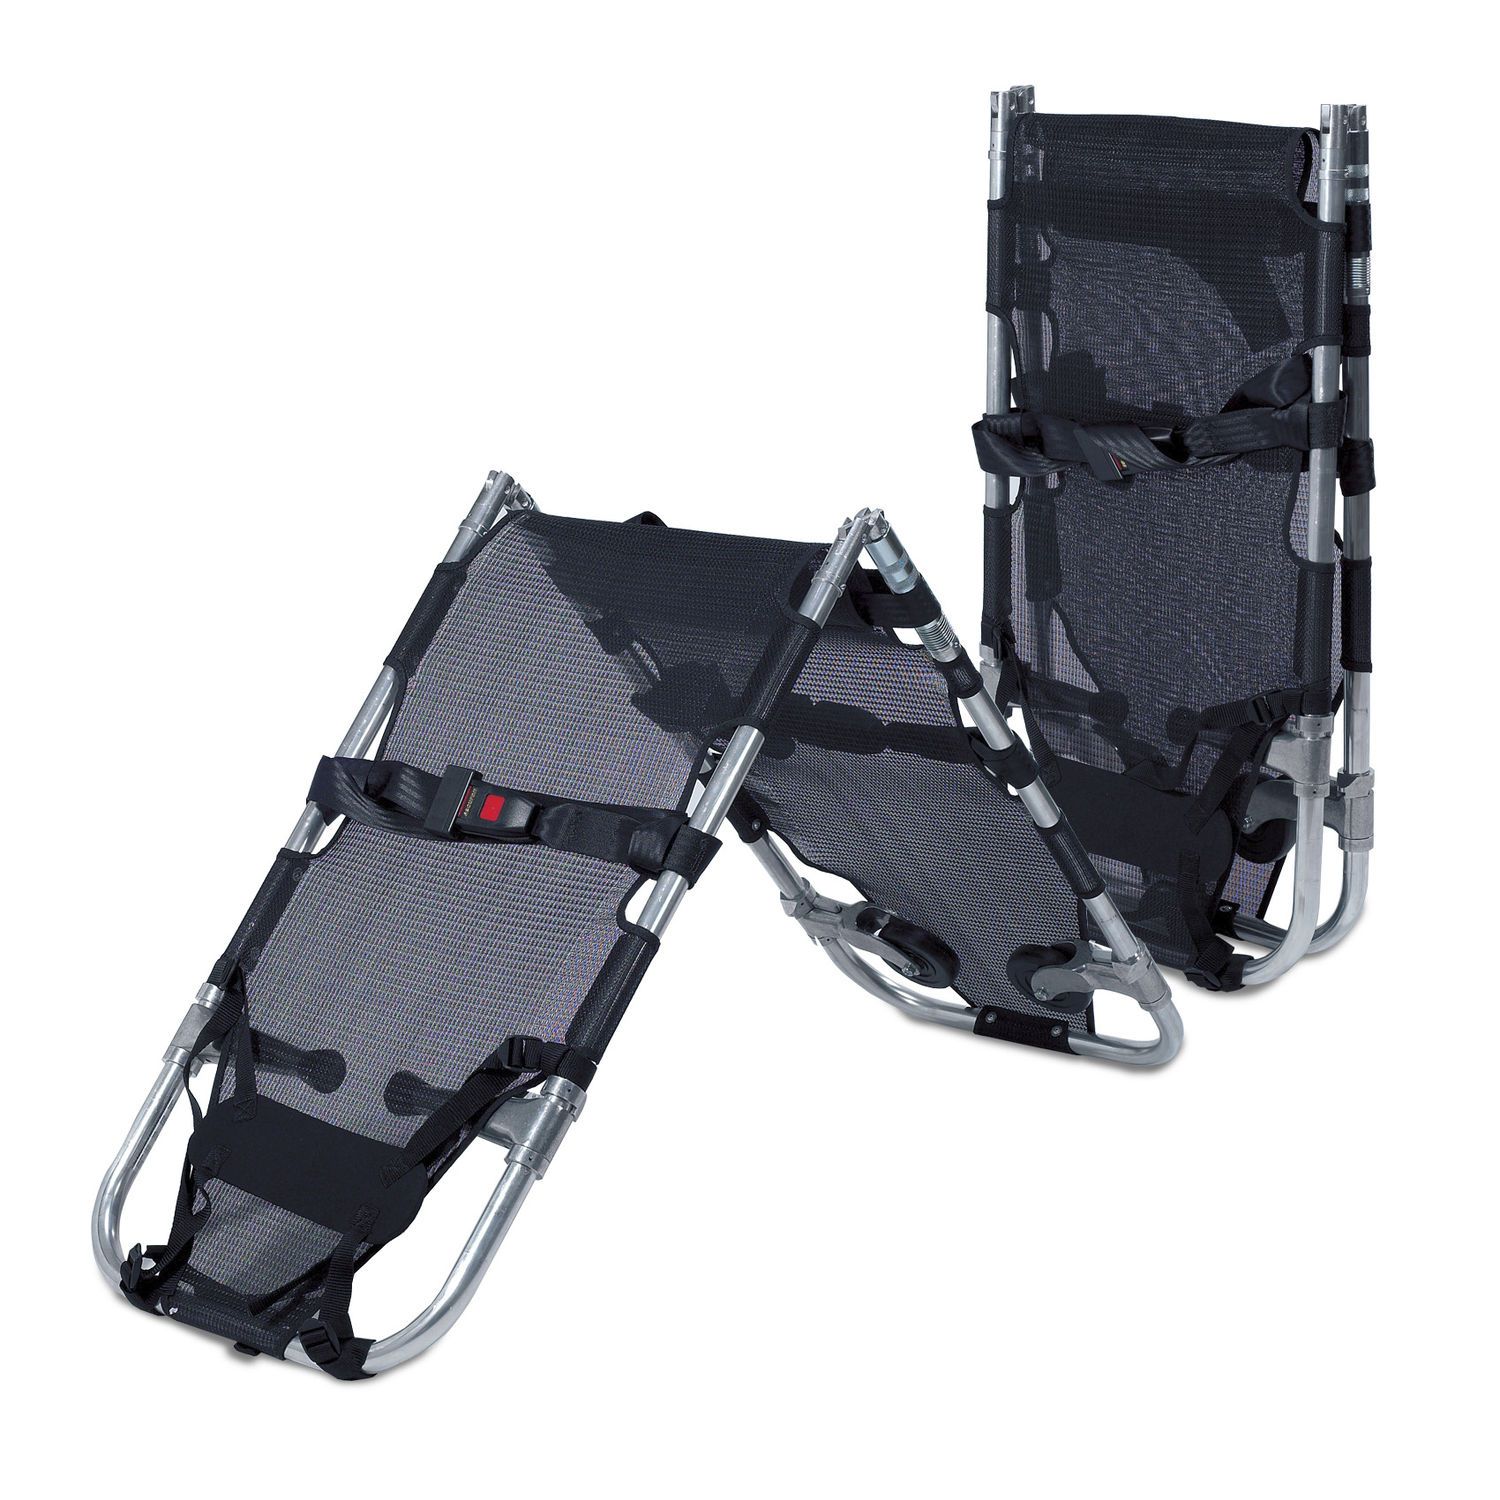 Folding stretcher / on casters / 1-section 159 kg | Model 11 Ferno (UK) Limited